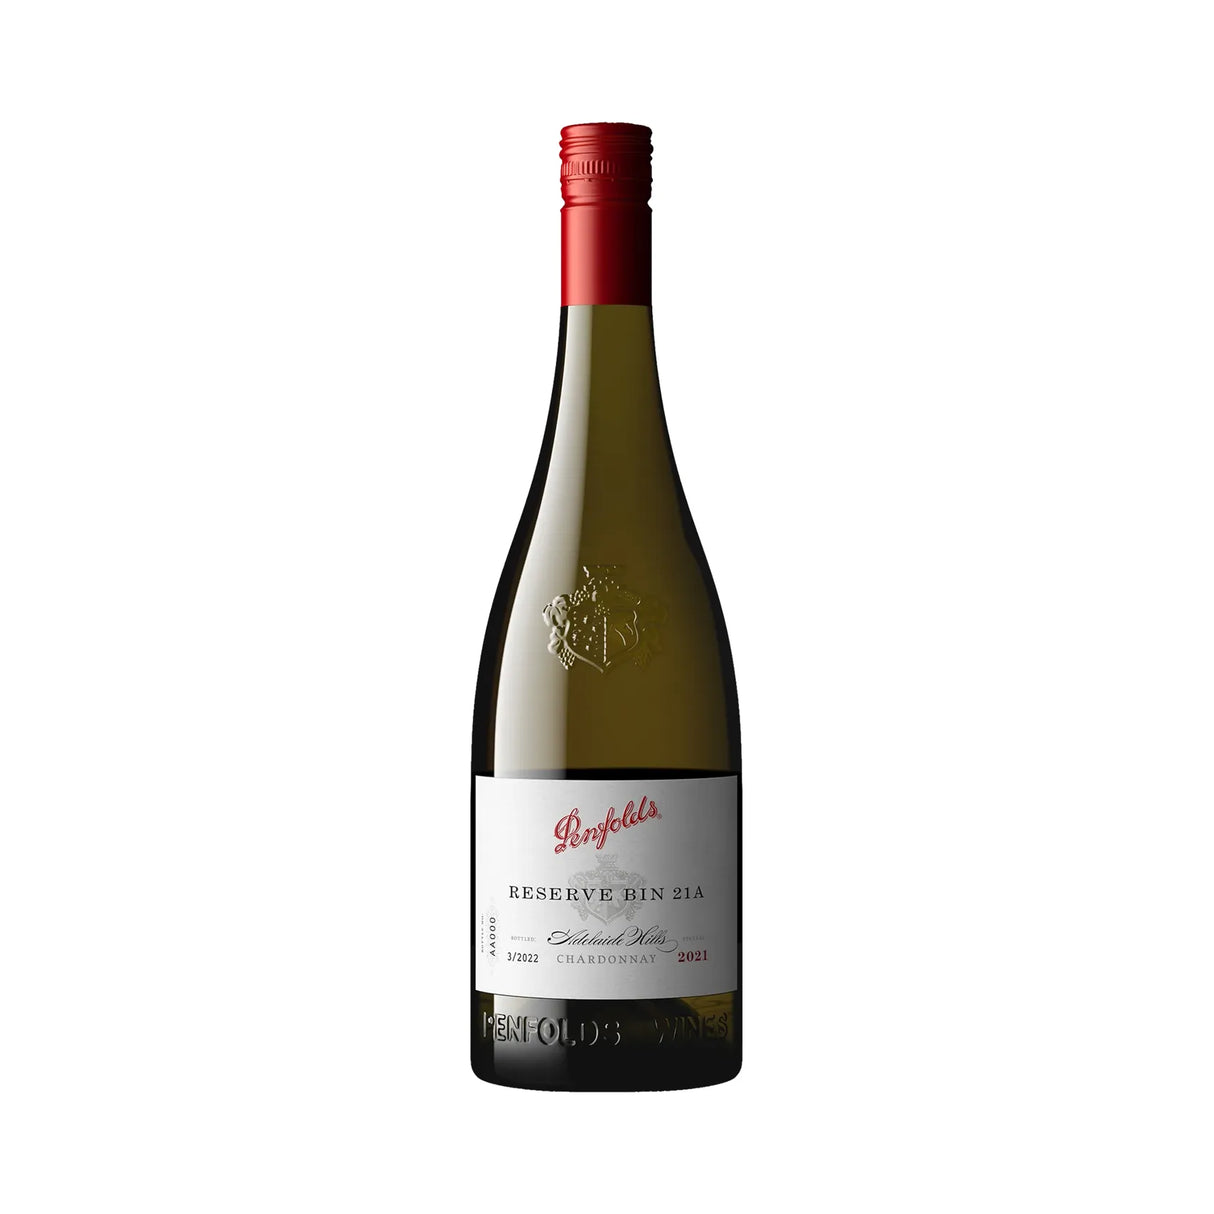 Penfolds Reserve Bin A Chardonnay Adelaide Hills 2019 (6 Bottles)